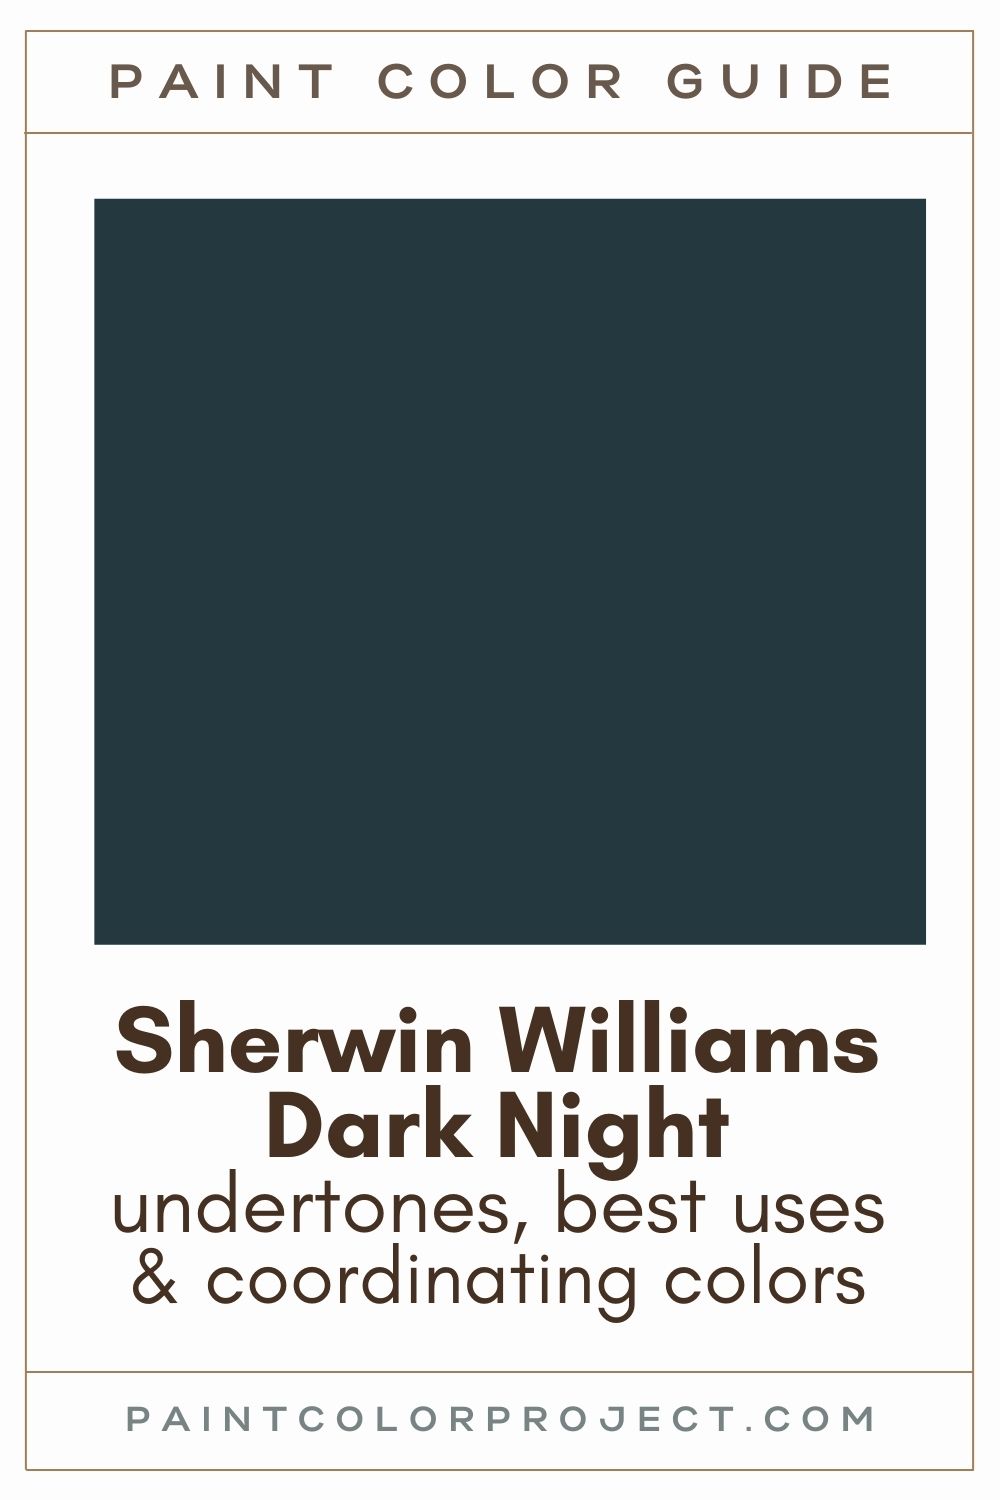 Sherwin Williams Dark Night Paint Color Guide.